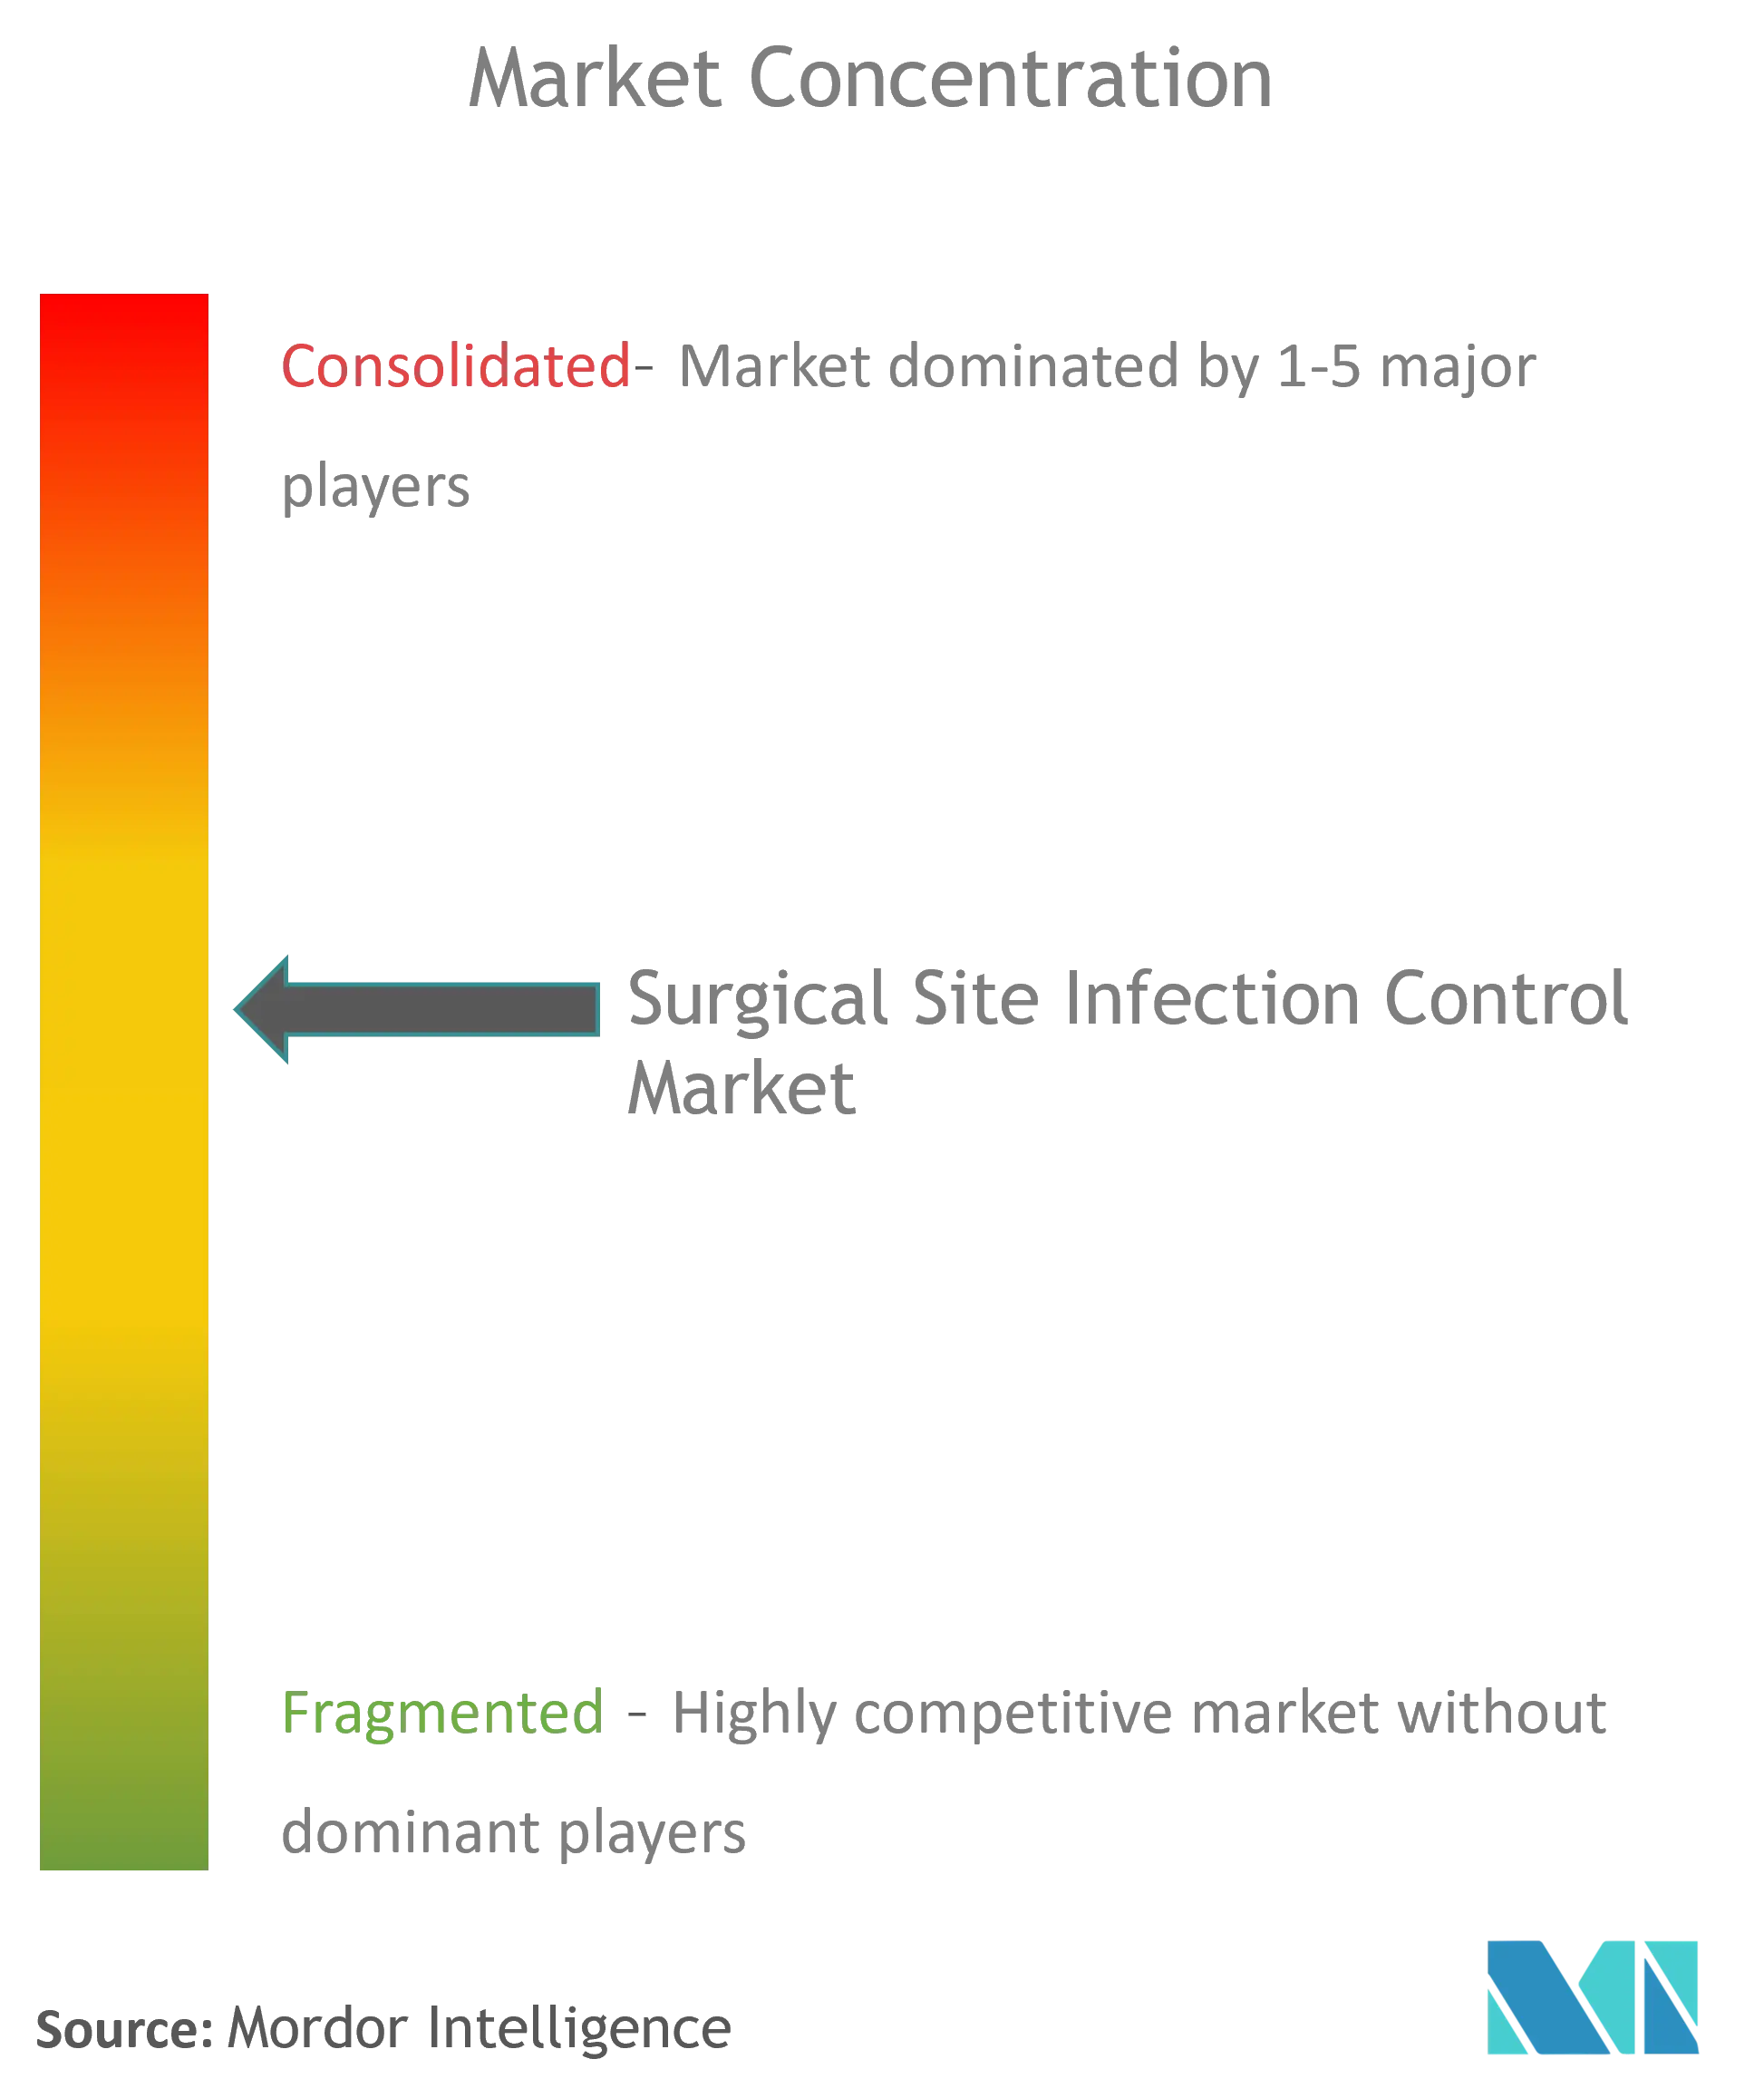 Surgical Site Infection Control Market Concentration